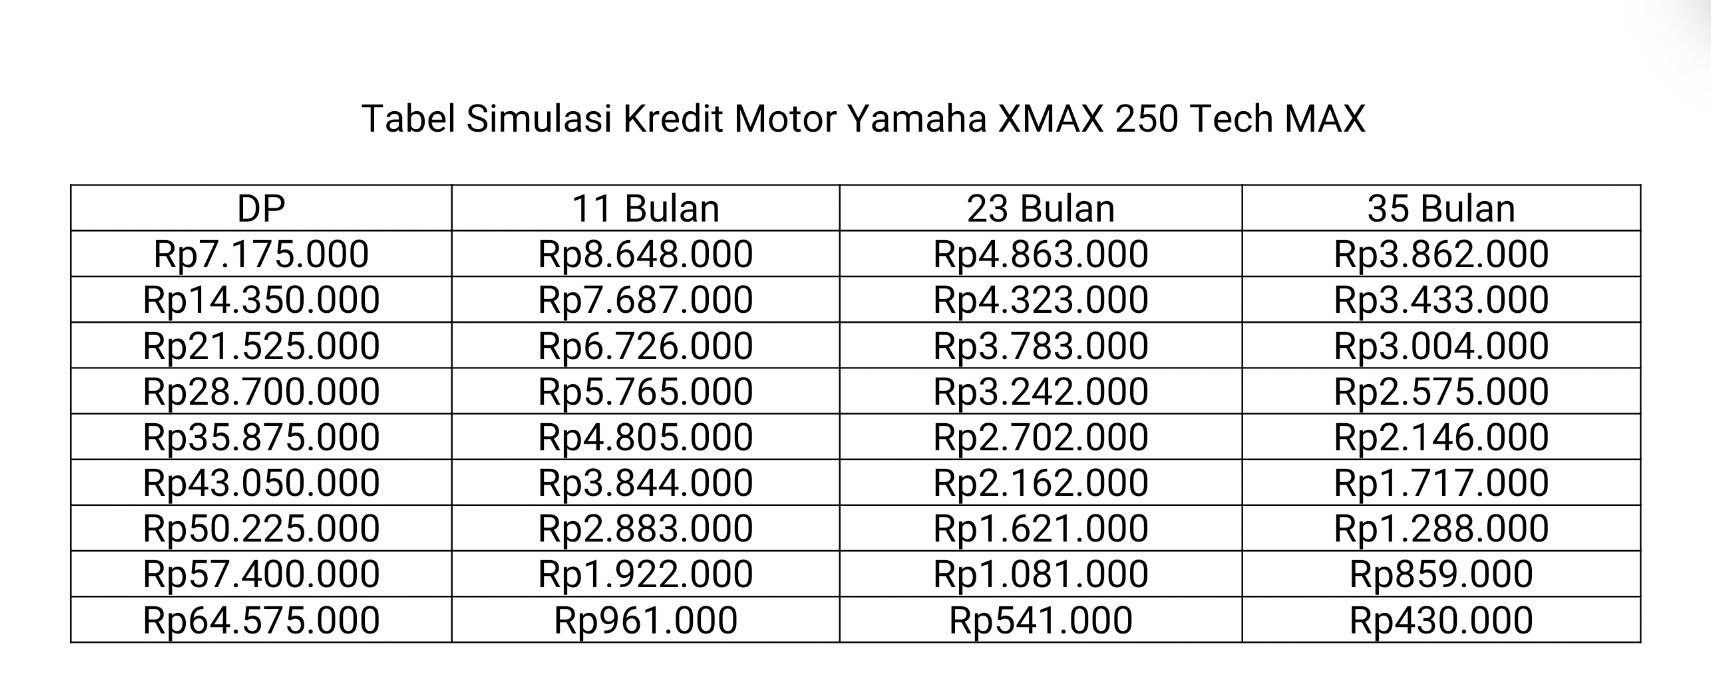 Tabel Simulasi Kredit Motor Yamaha XMAX 250 Tech MAX untuk Maret 2024 lengkap.